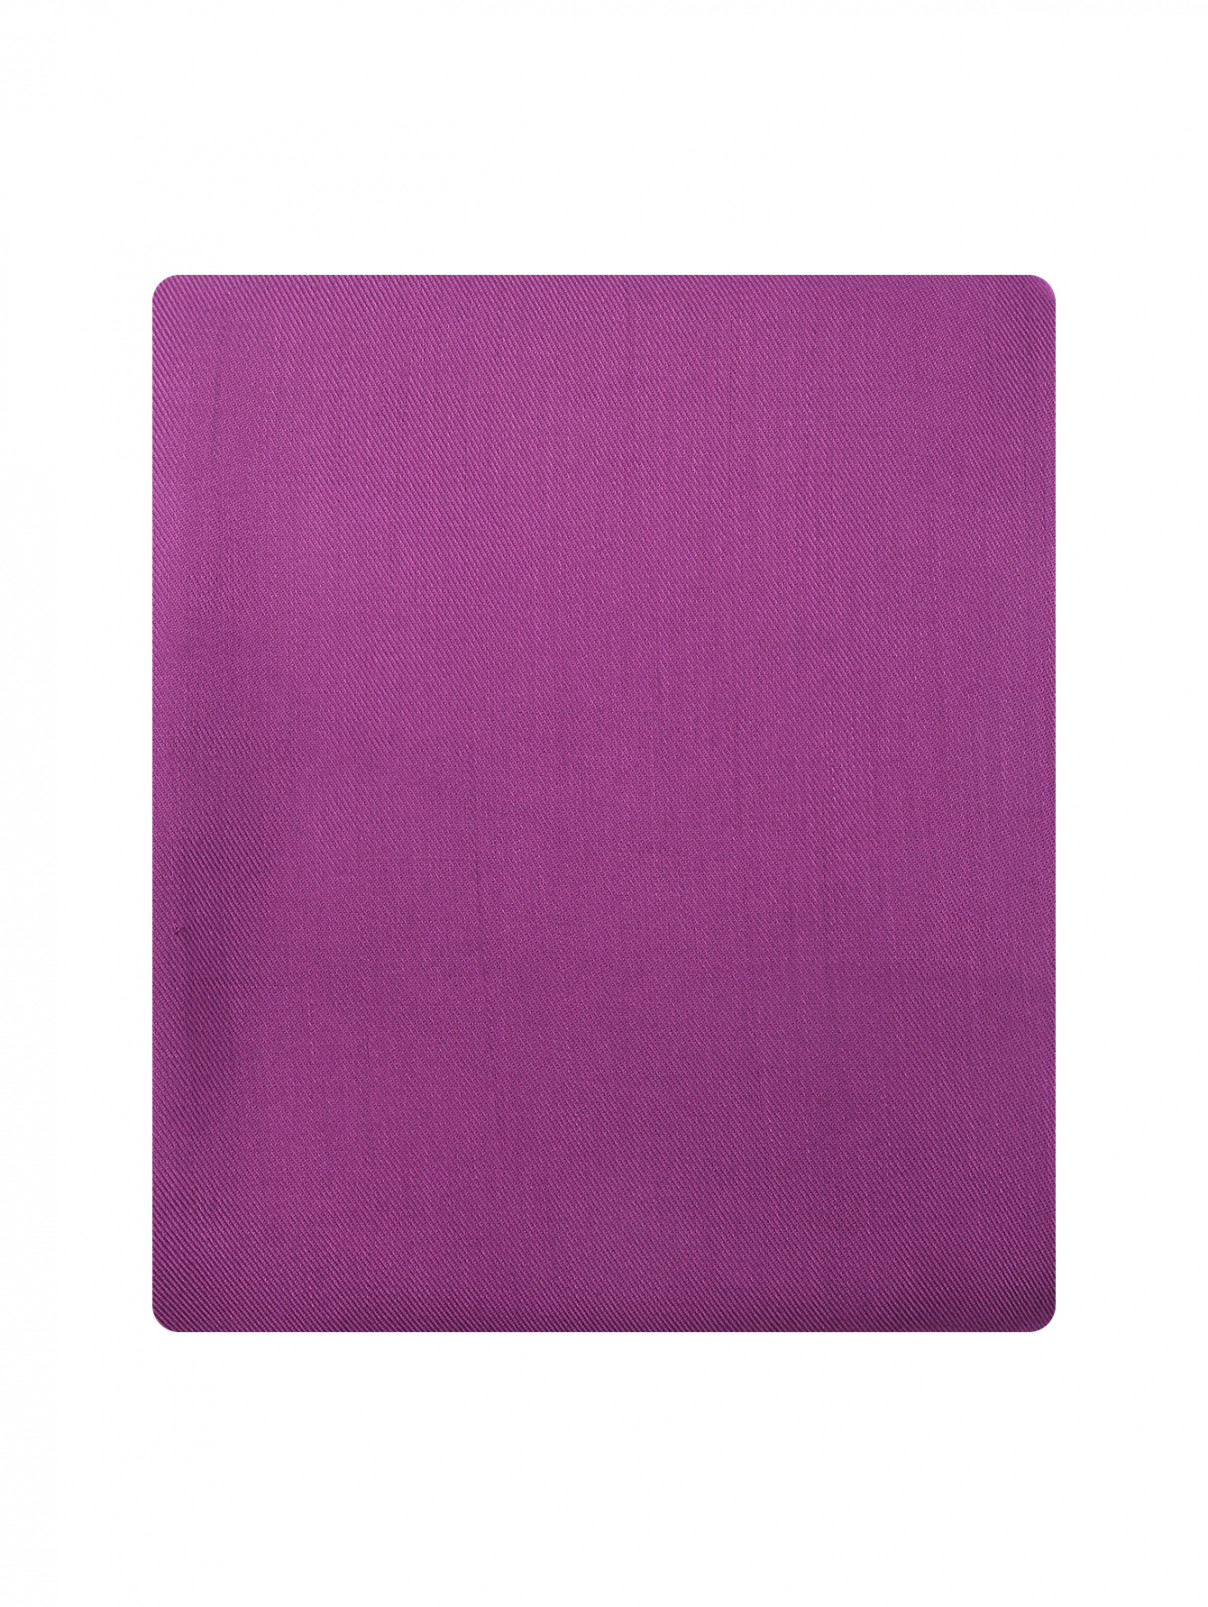 Шарф с бахромой Weekend Max Mara  –  Общий вид  – Цвет:  Фиолетовый